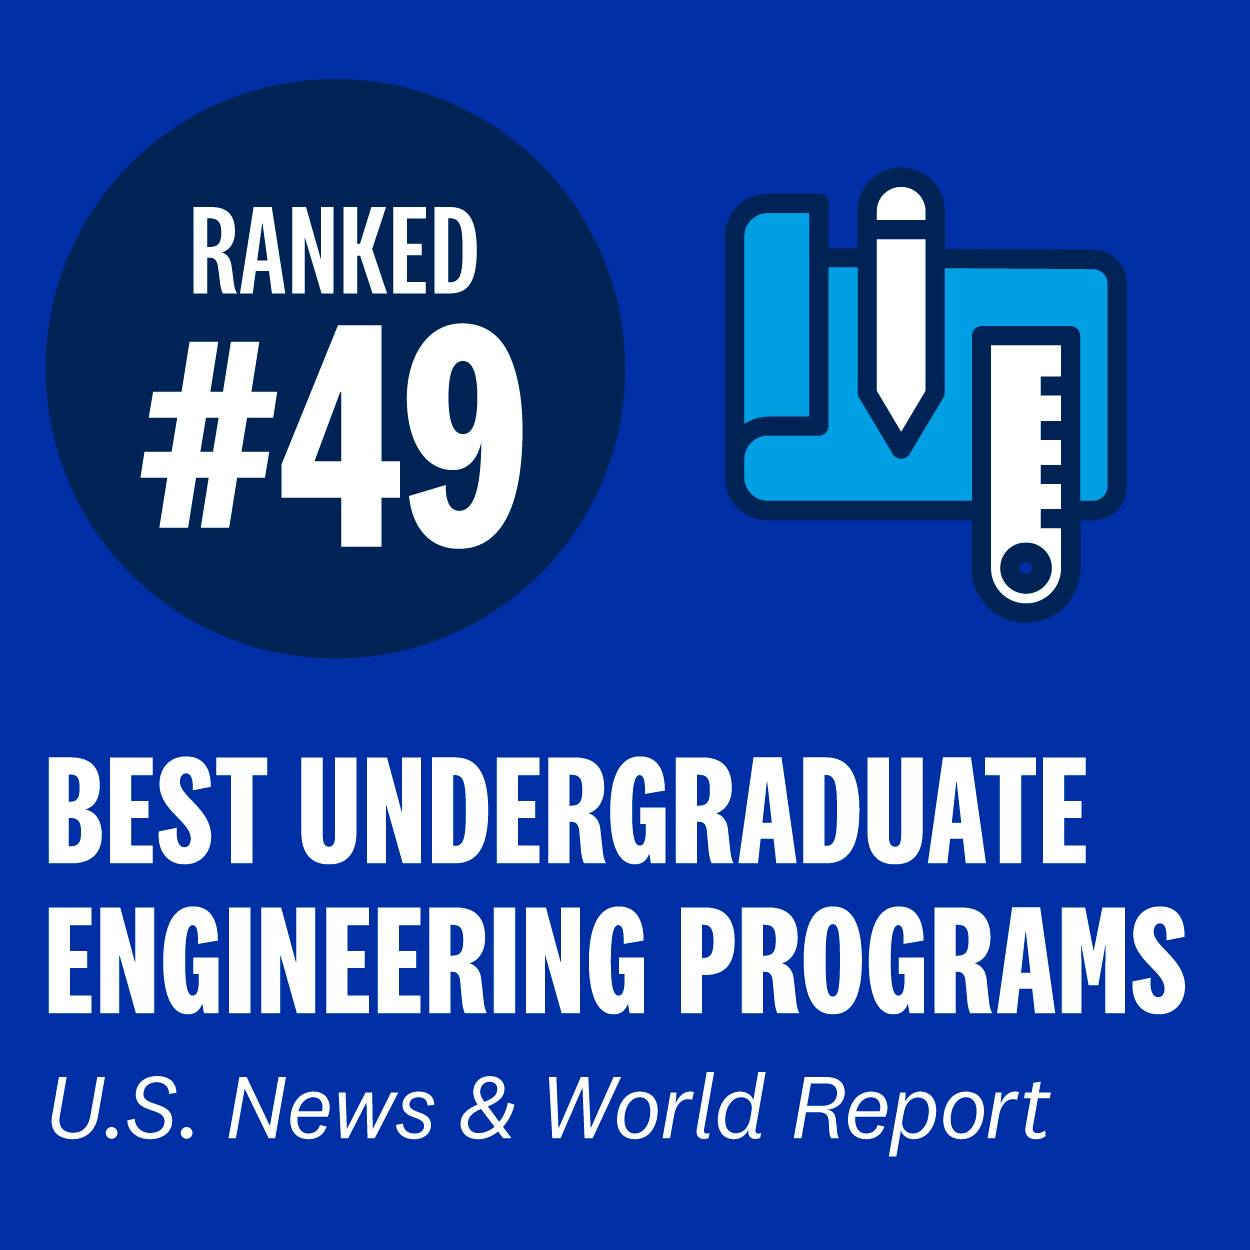 Ranked #49 in Best Undergraduate Engineering Programs by U.S. News & World Report